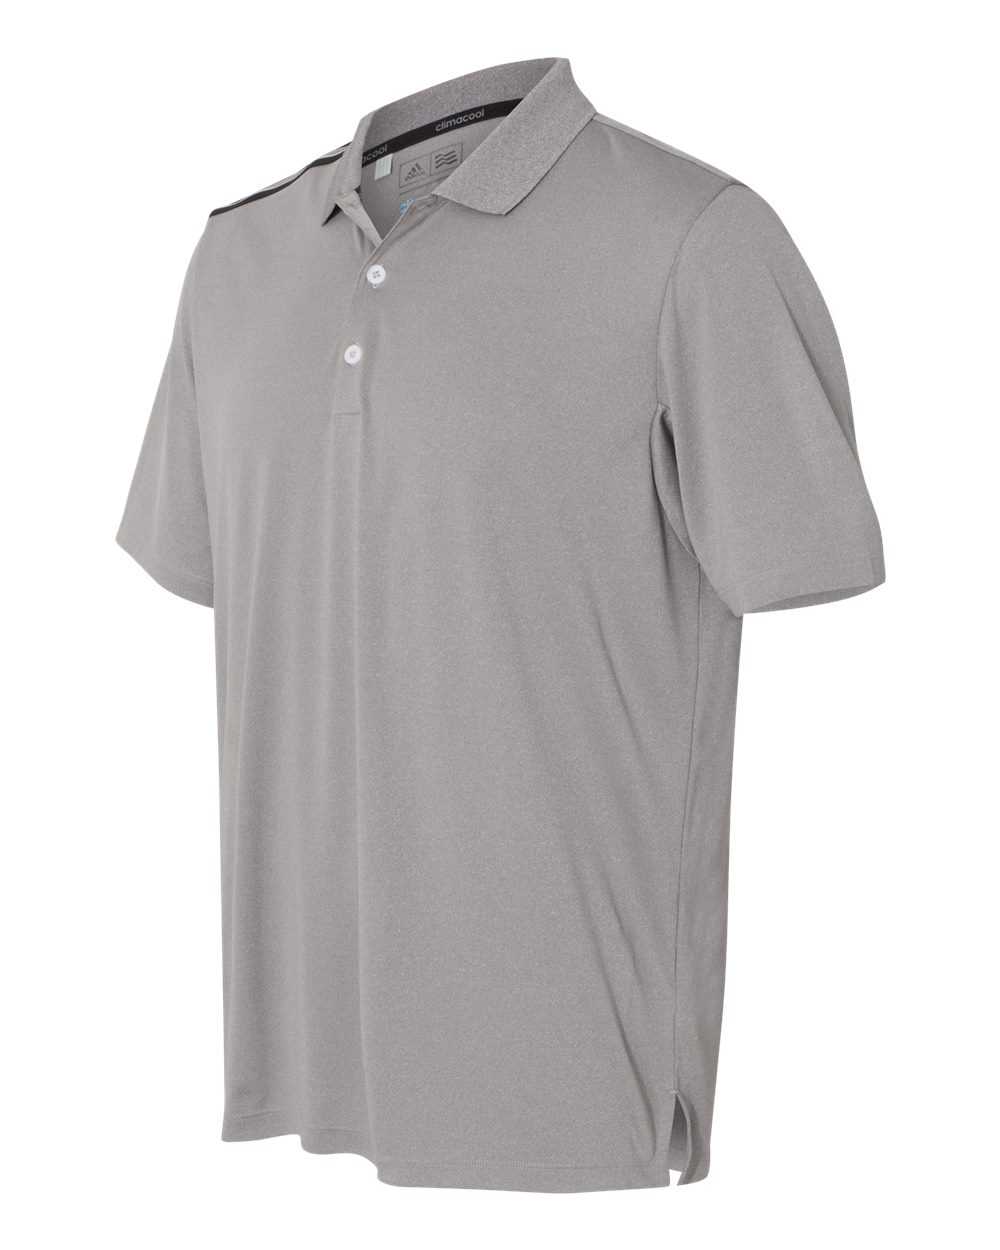 Adidas A233 3-Stripes Shoulder Sport Shirt - Medium Grey Heather Black Mid Grey - HIT a Double